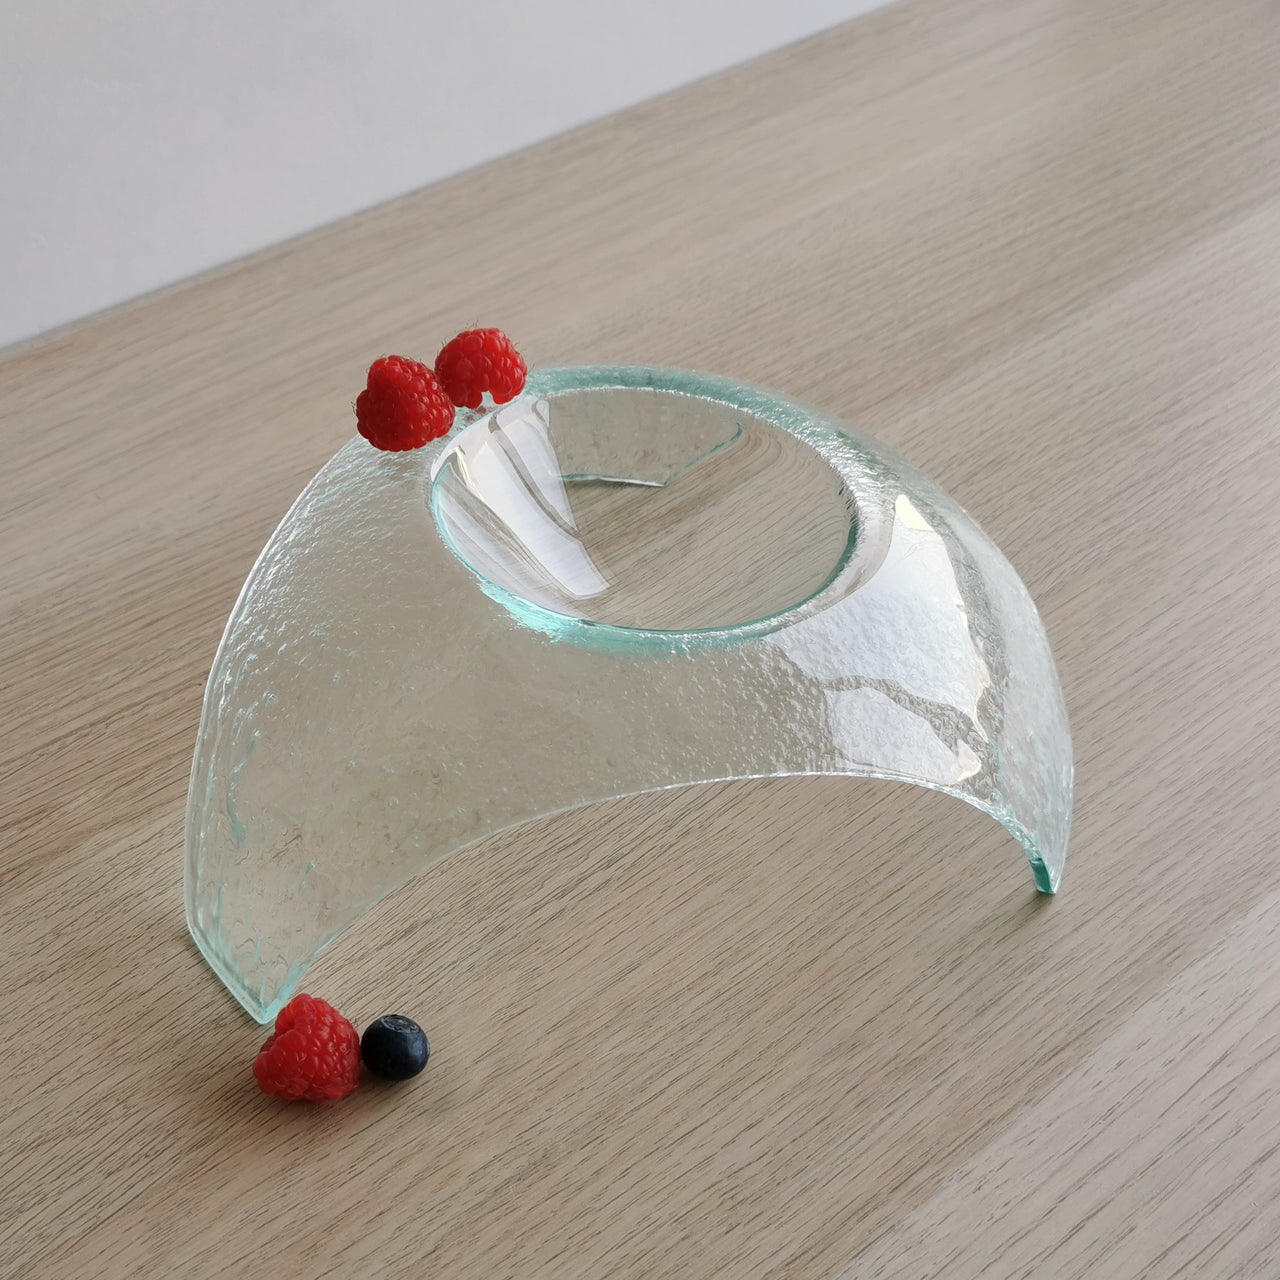 SOL Minimalist Transparent Glass Bowl. Artistic One Of A Kind Glass Bowl - 3 15/16" (10cm.)